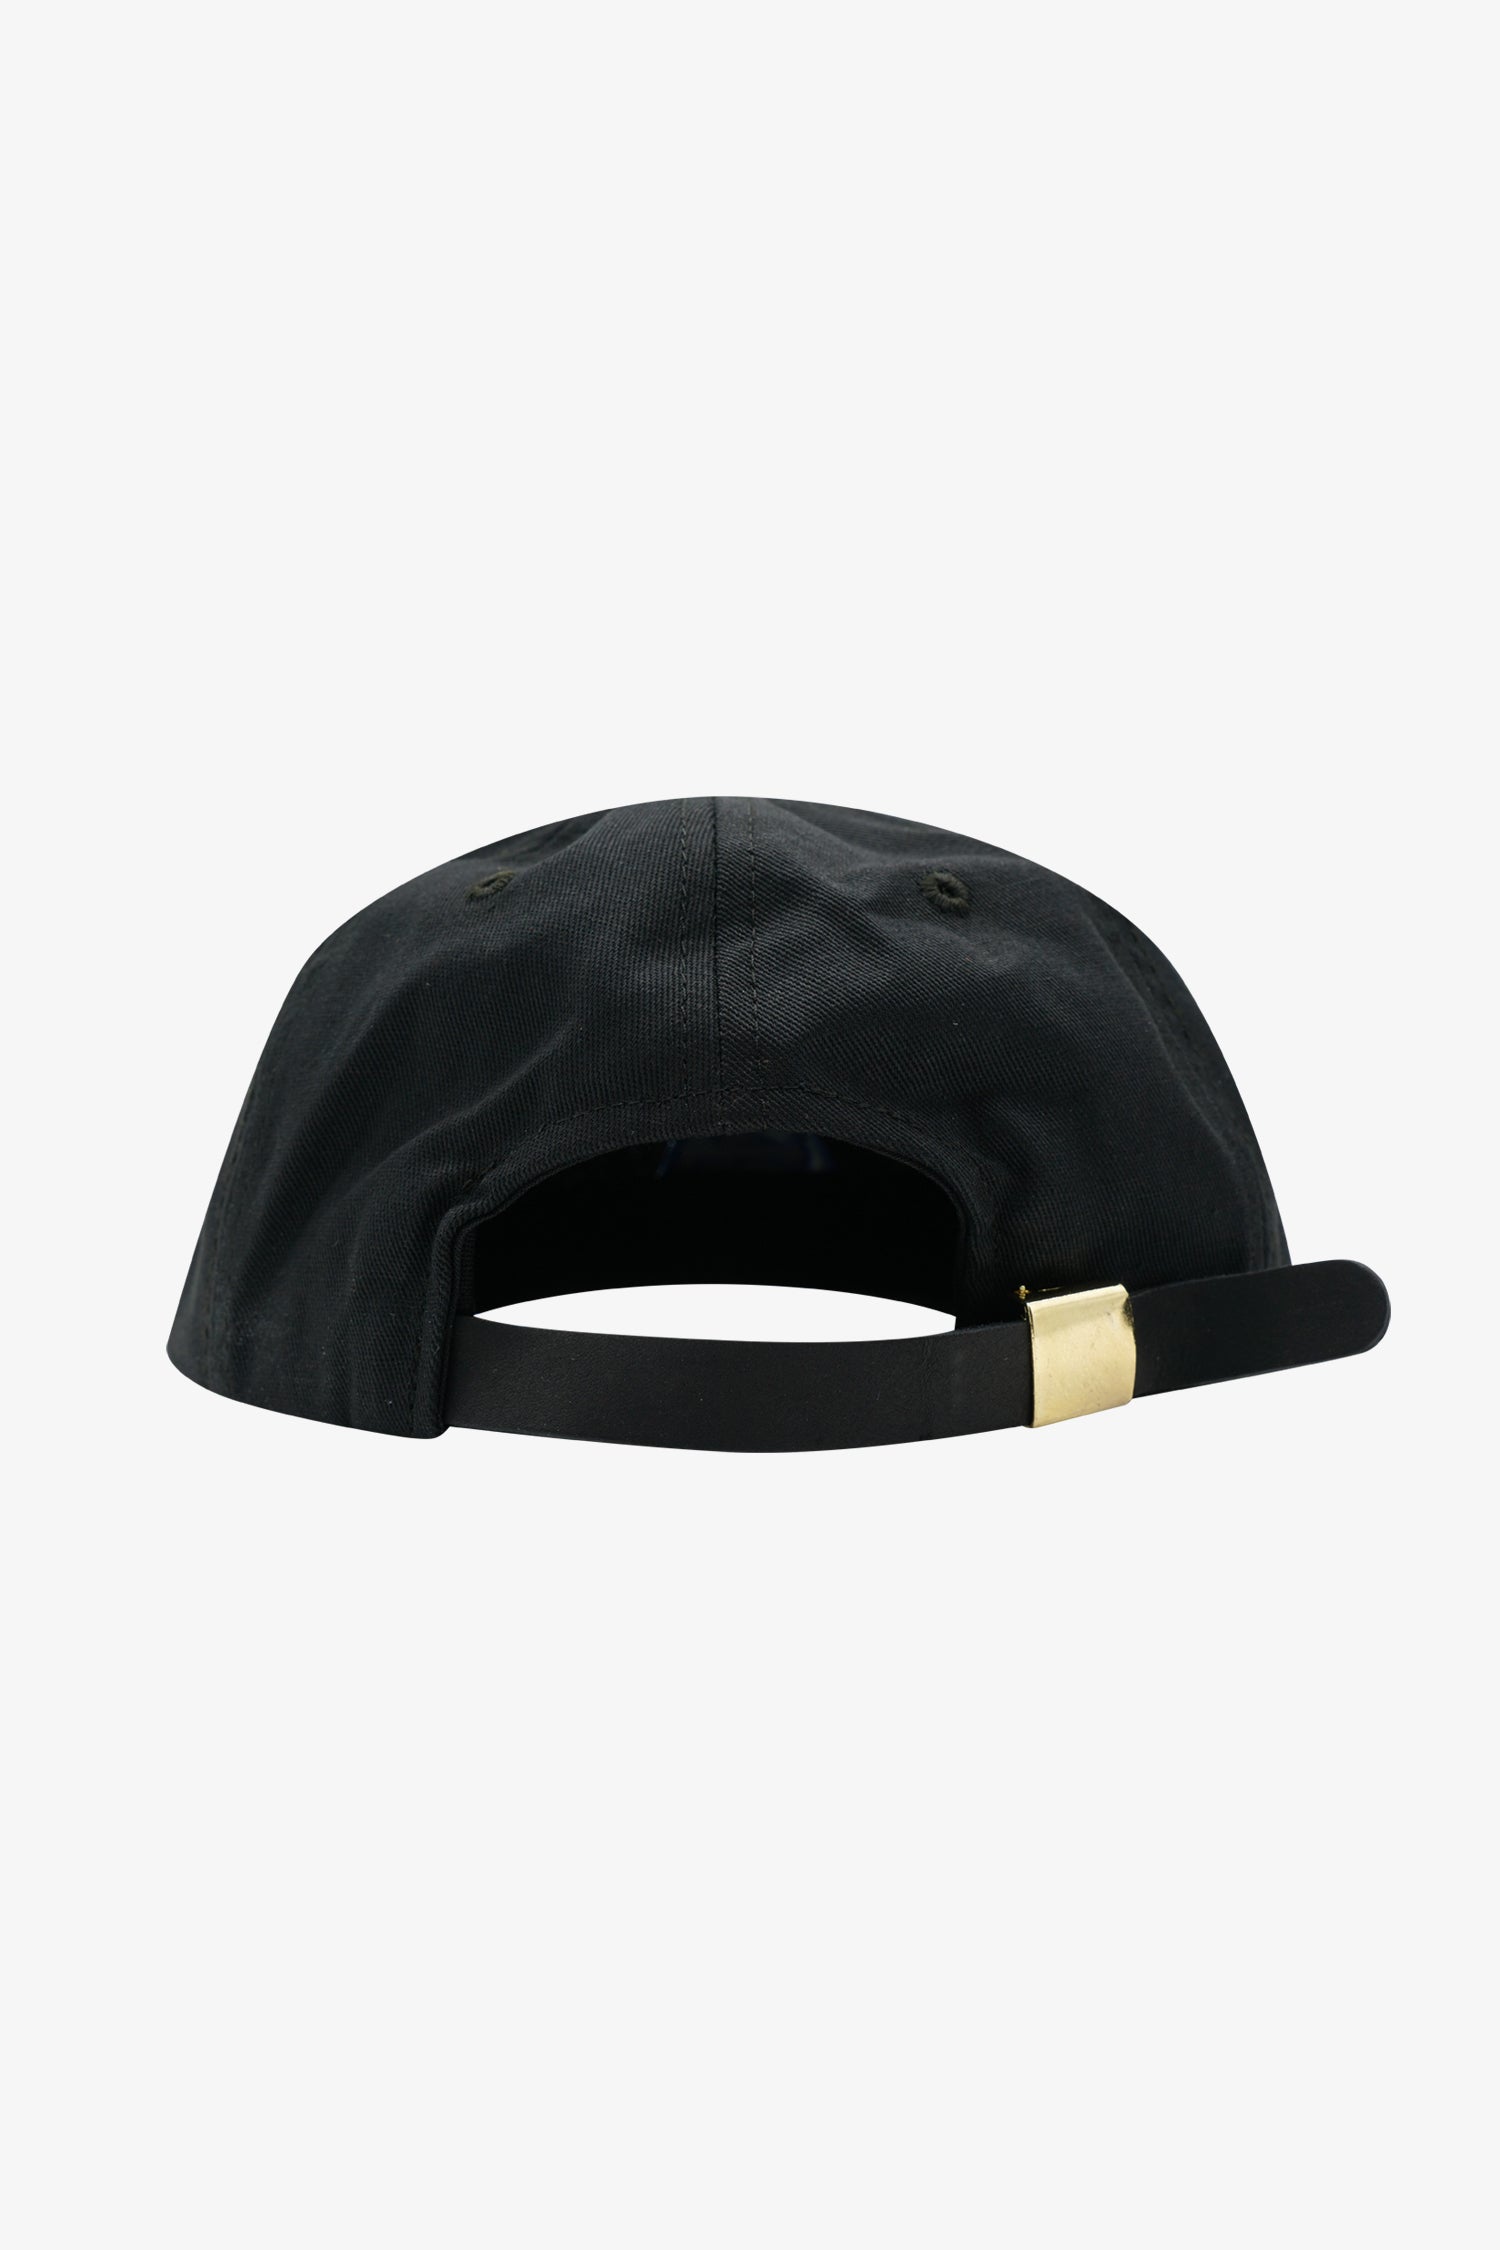 Selectshop FRAME - ALLTIMERS Love Thyself Hat Headwear Dubai